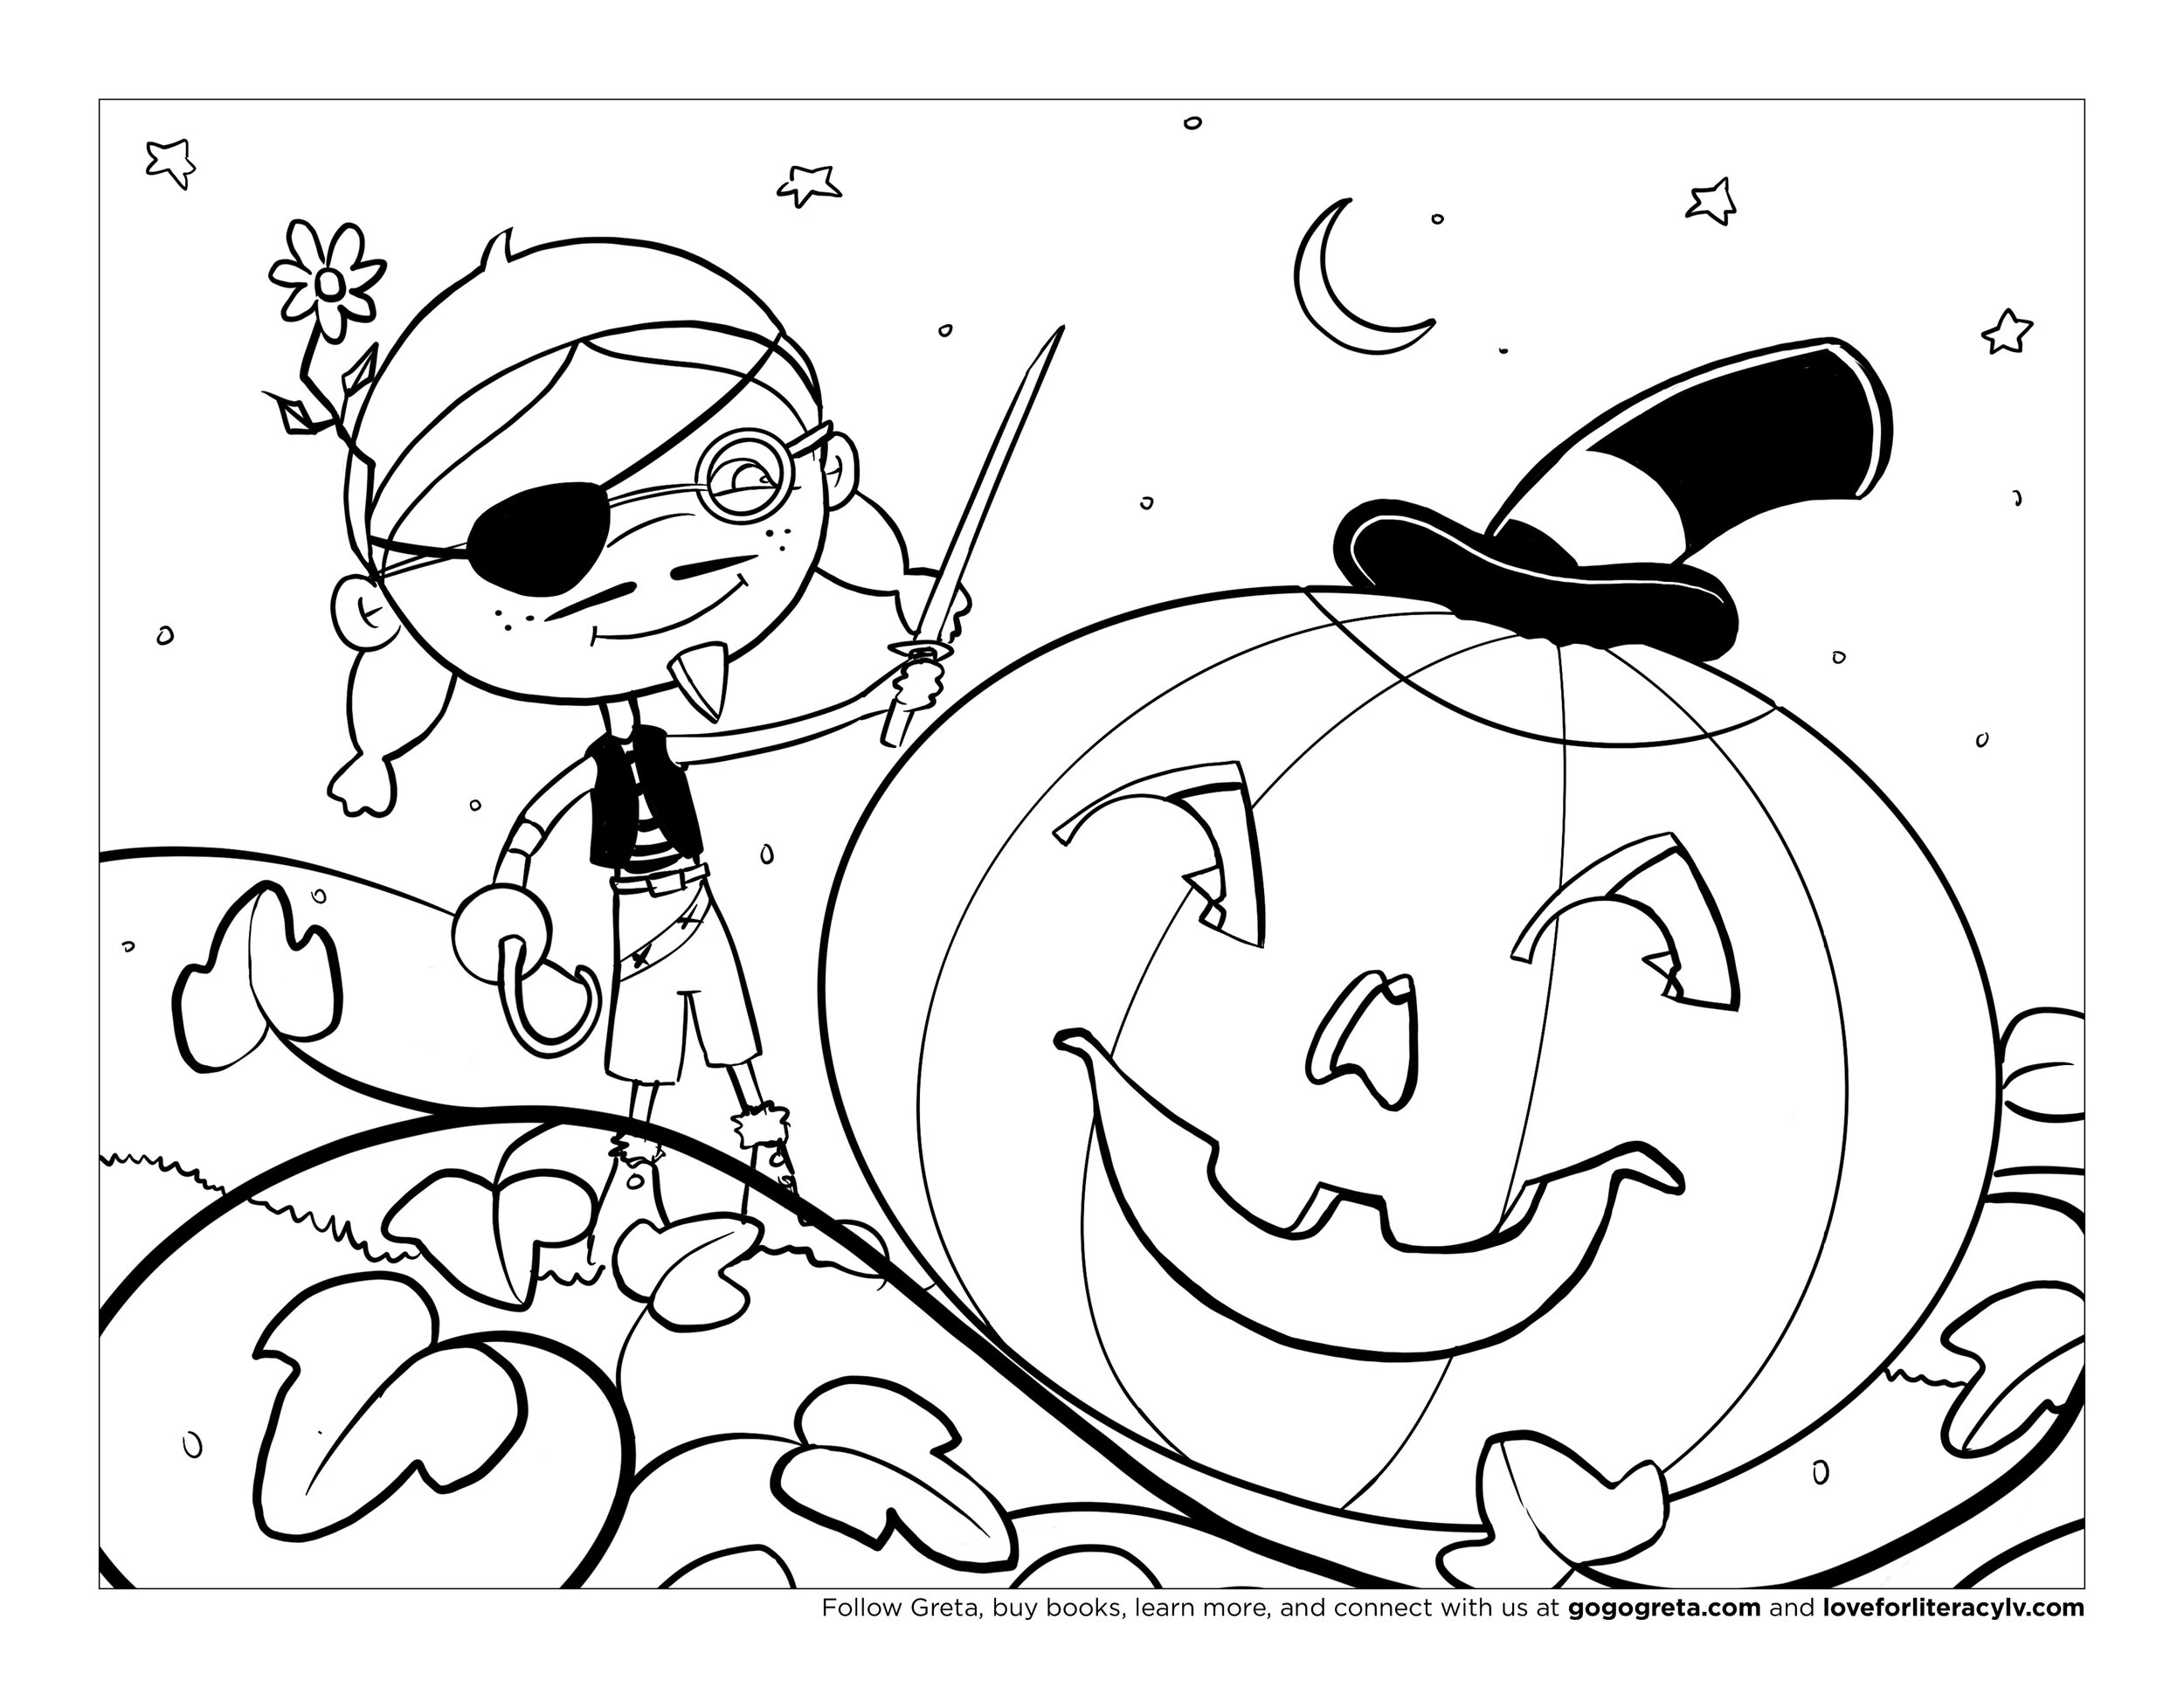 Greta_Halloween_ColoringPage_103120.jpg